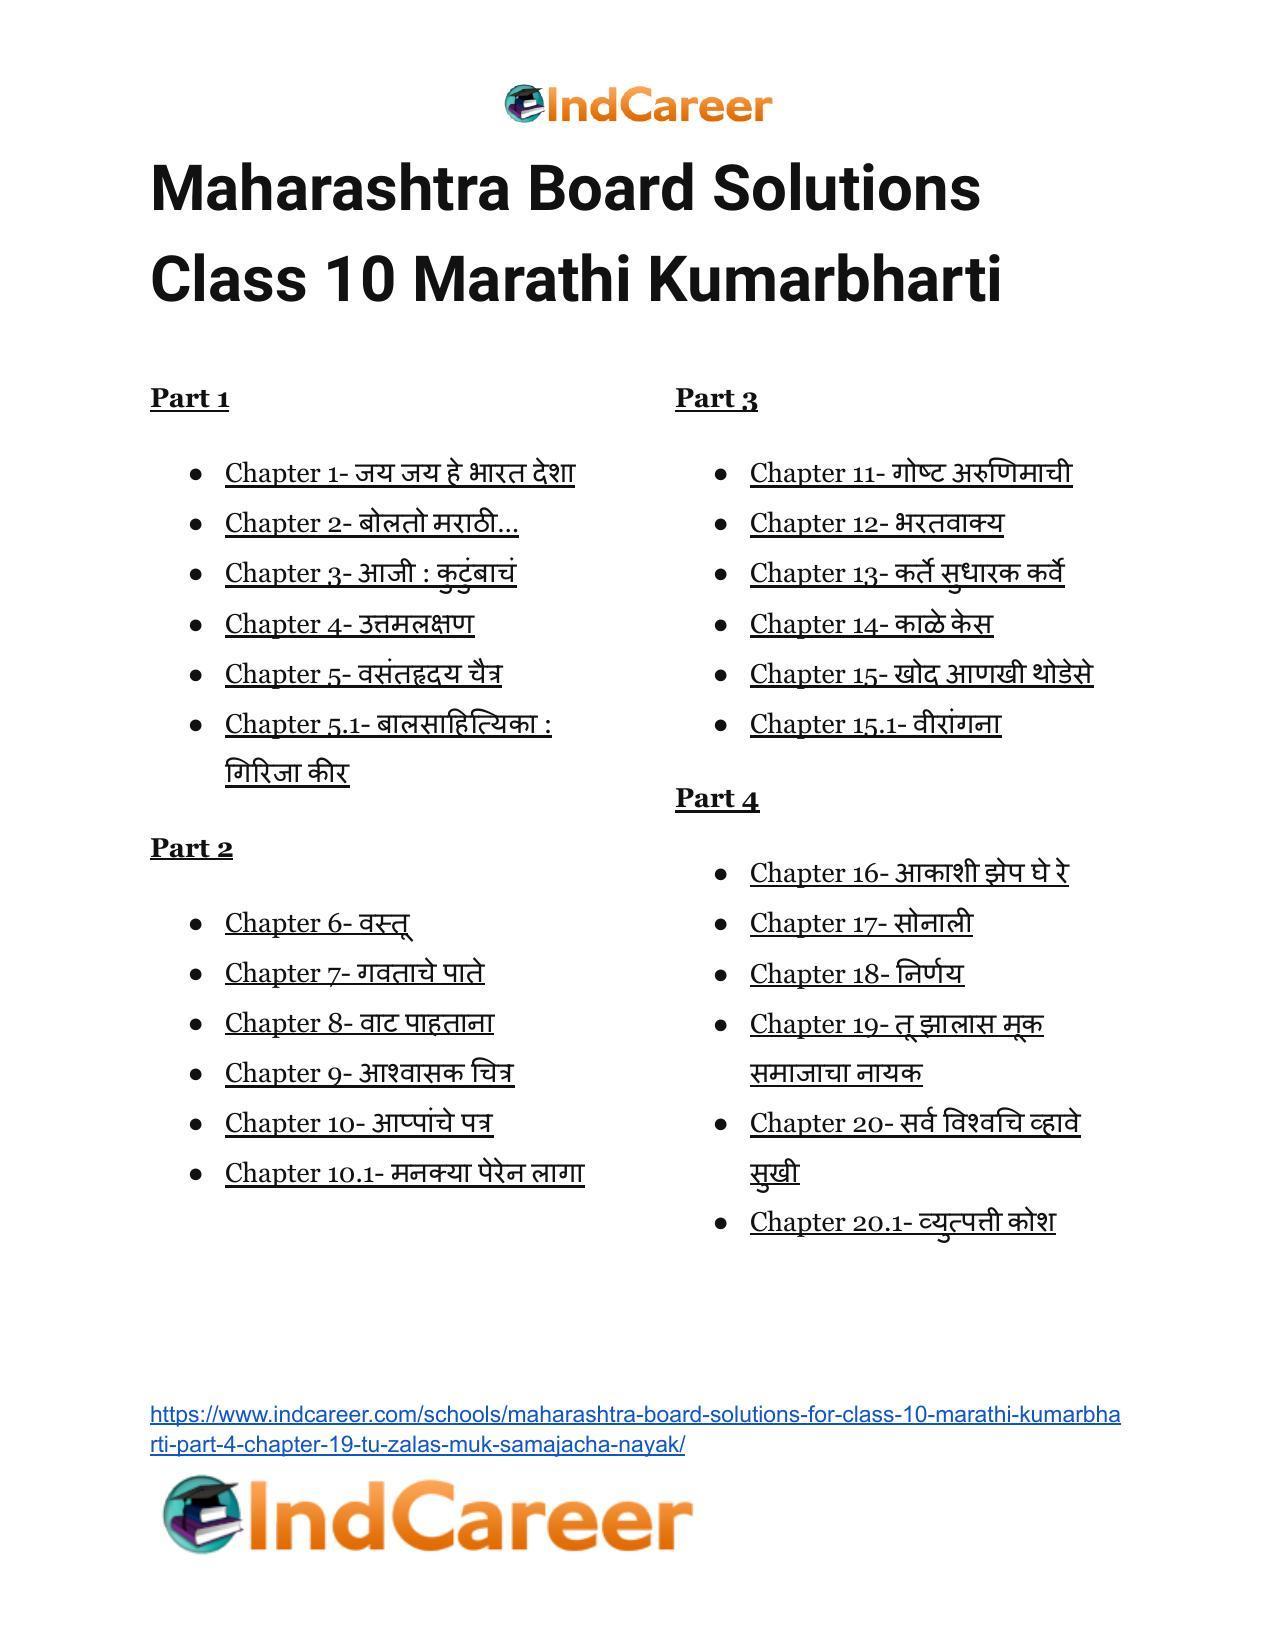 Maharashtra Board Solutions for Class 10- Marathi Kumarbharti (Part- 4): Chapter 19- तू झालास मूक समाजाचा नायक - Page 22